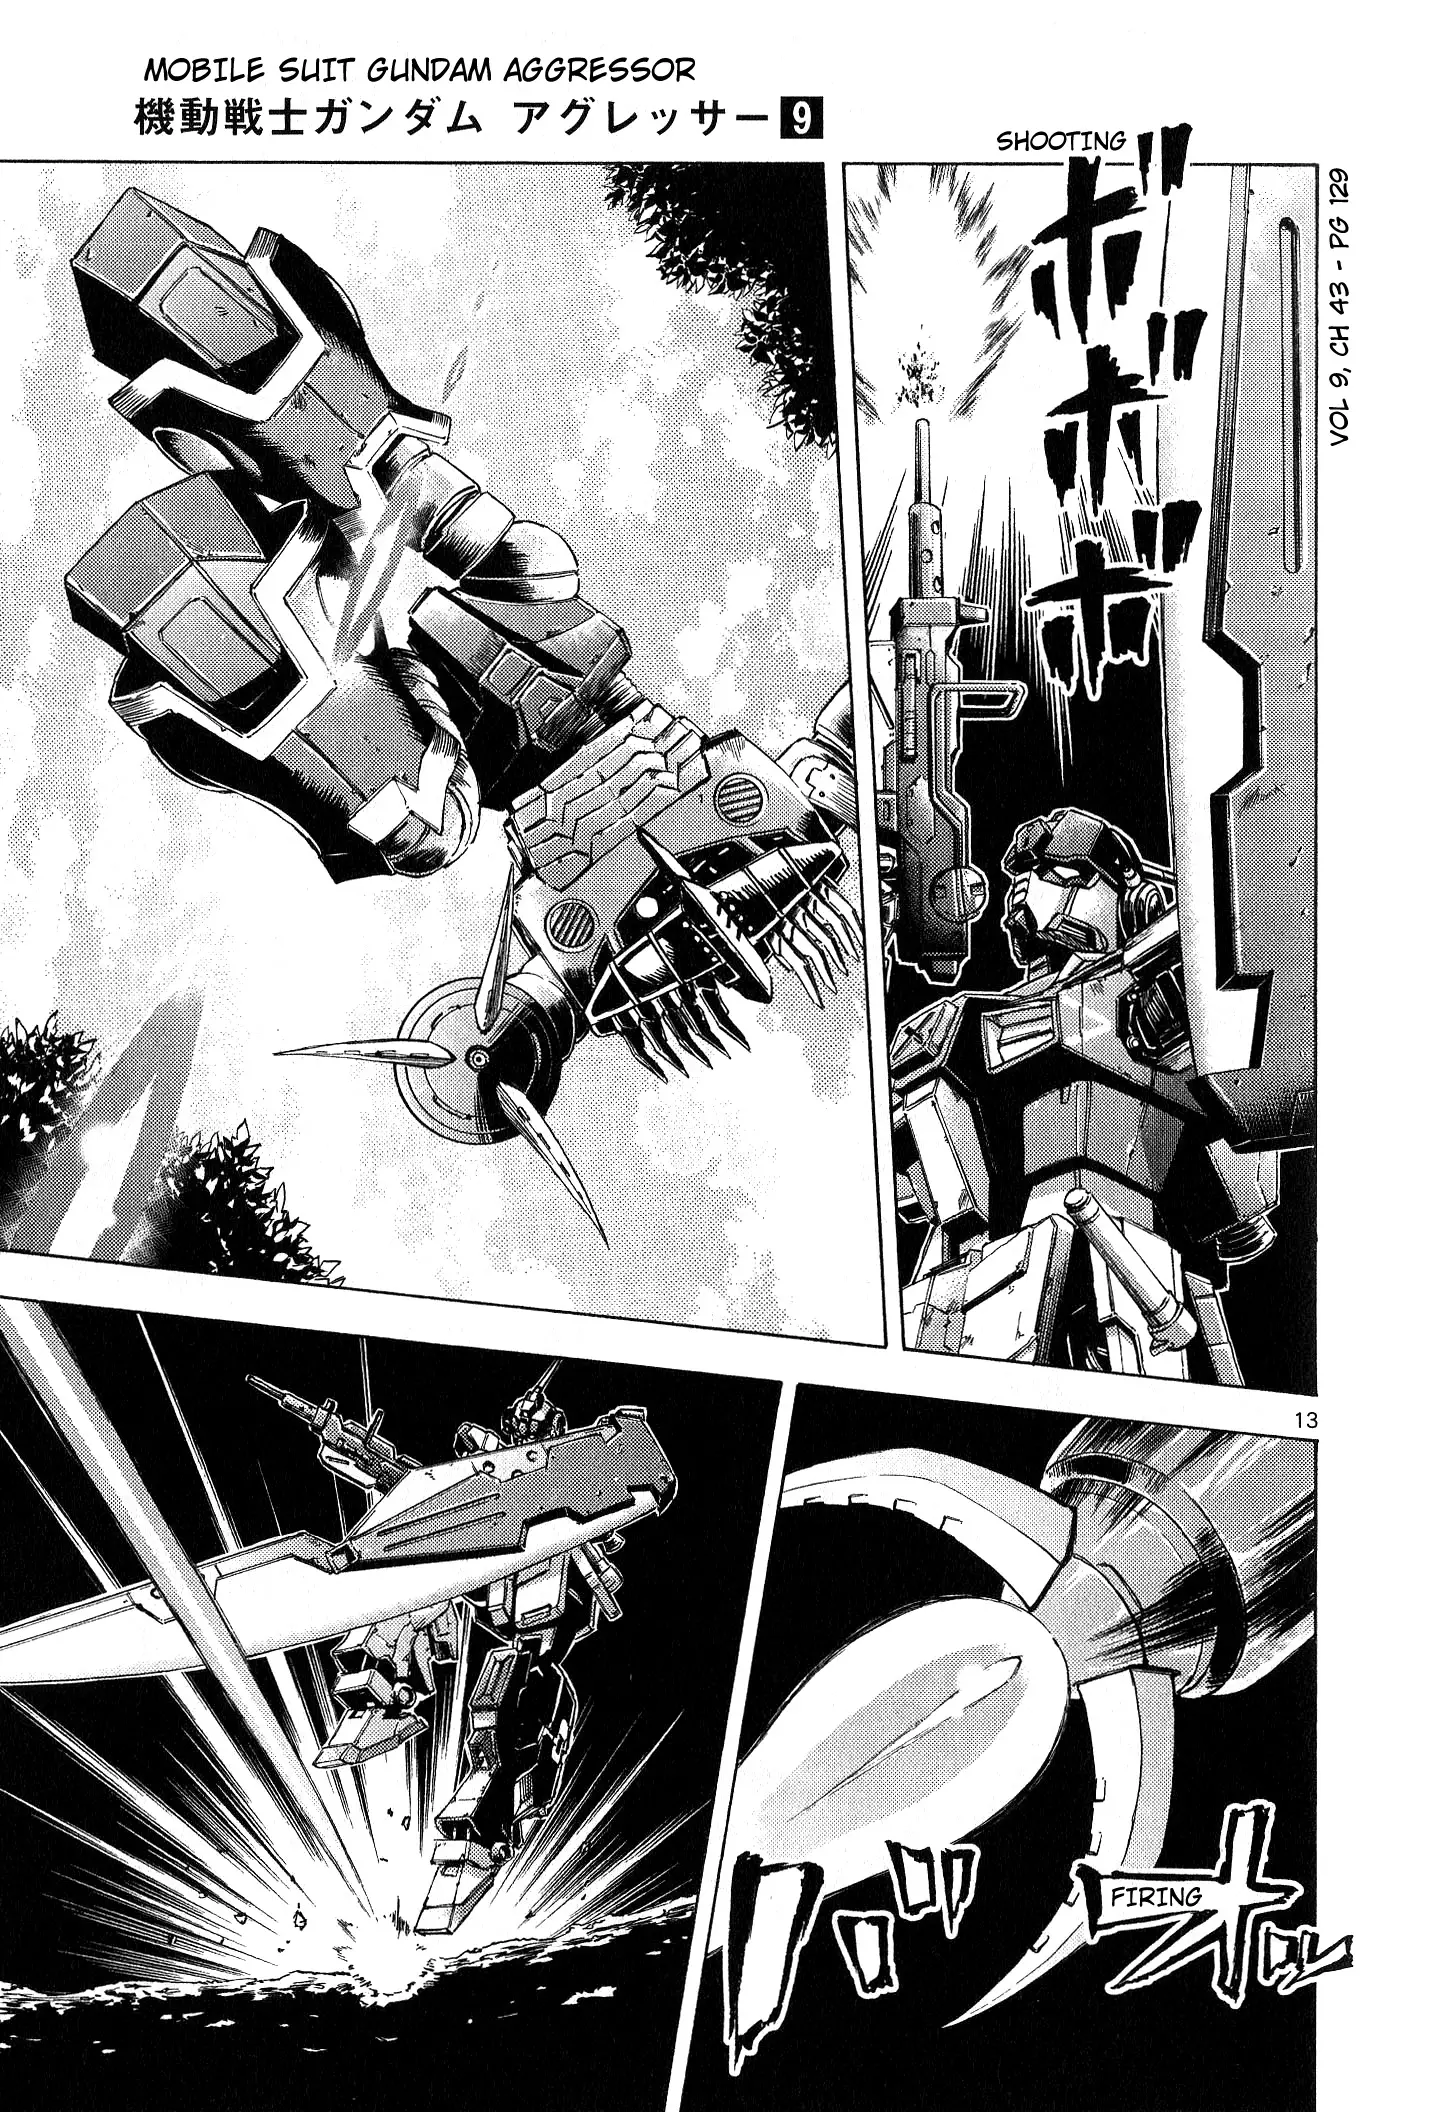 Mobile Suit Gundam Aggressor - 43 page 13-4af348e9